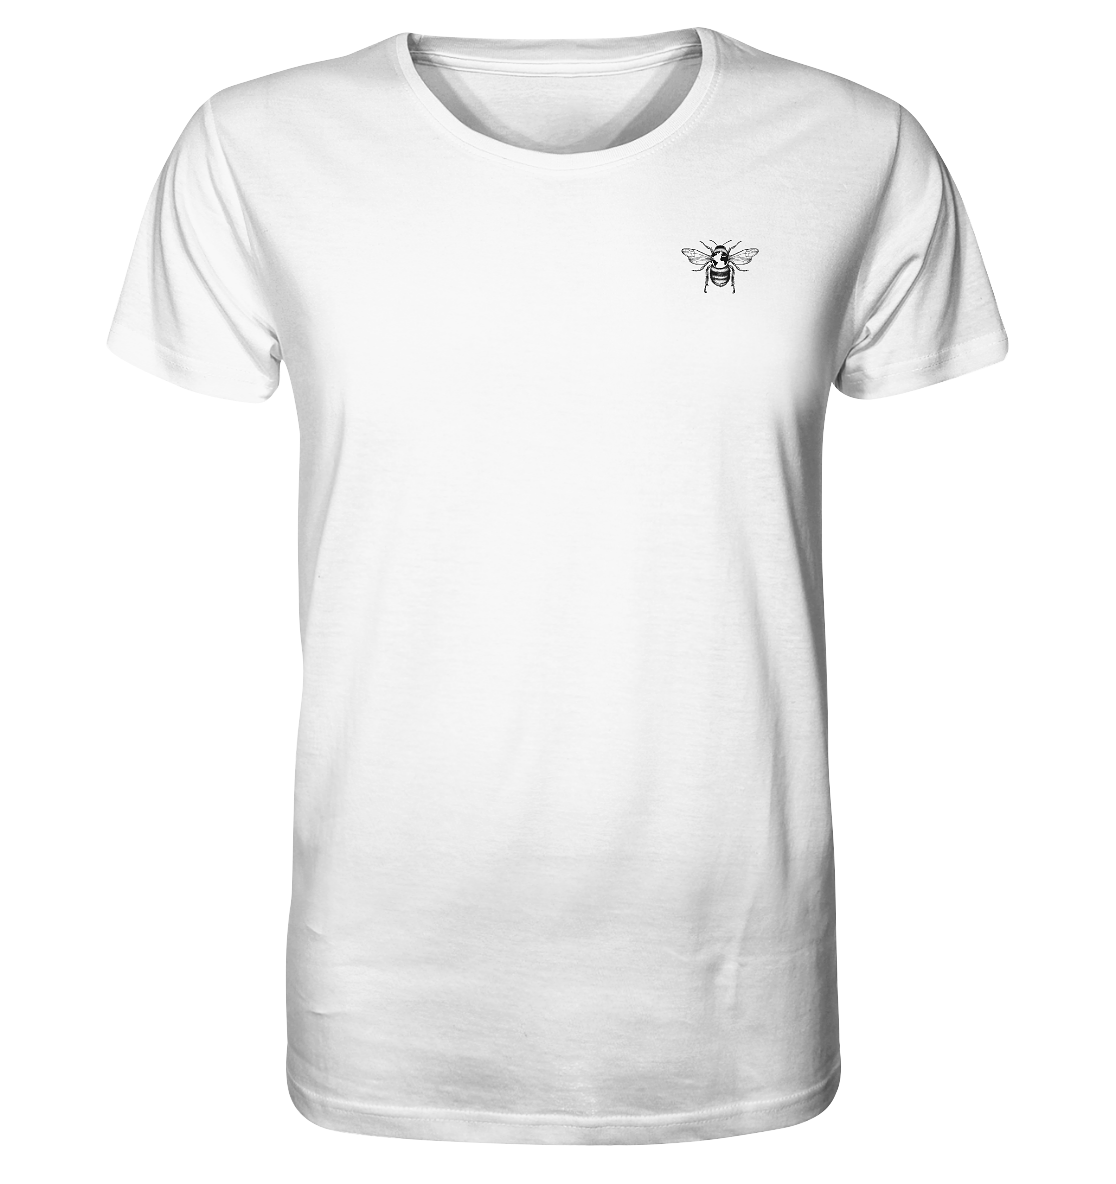 front-organic-shirt-f8f8f8-1116x.png